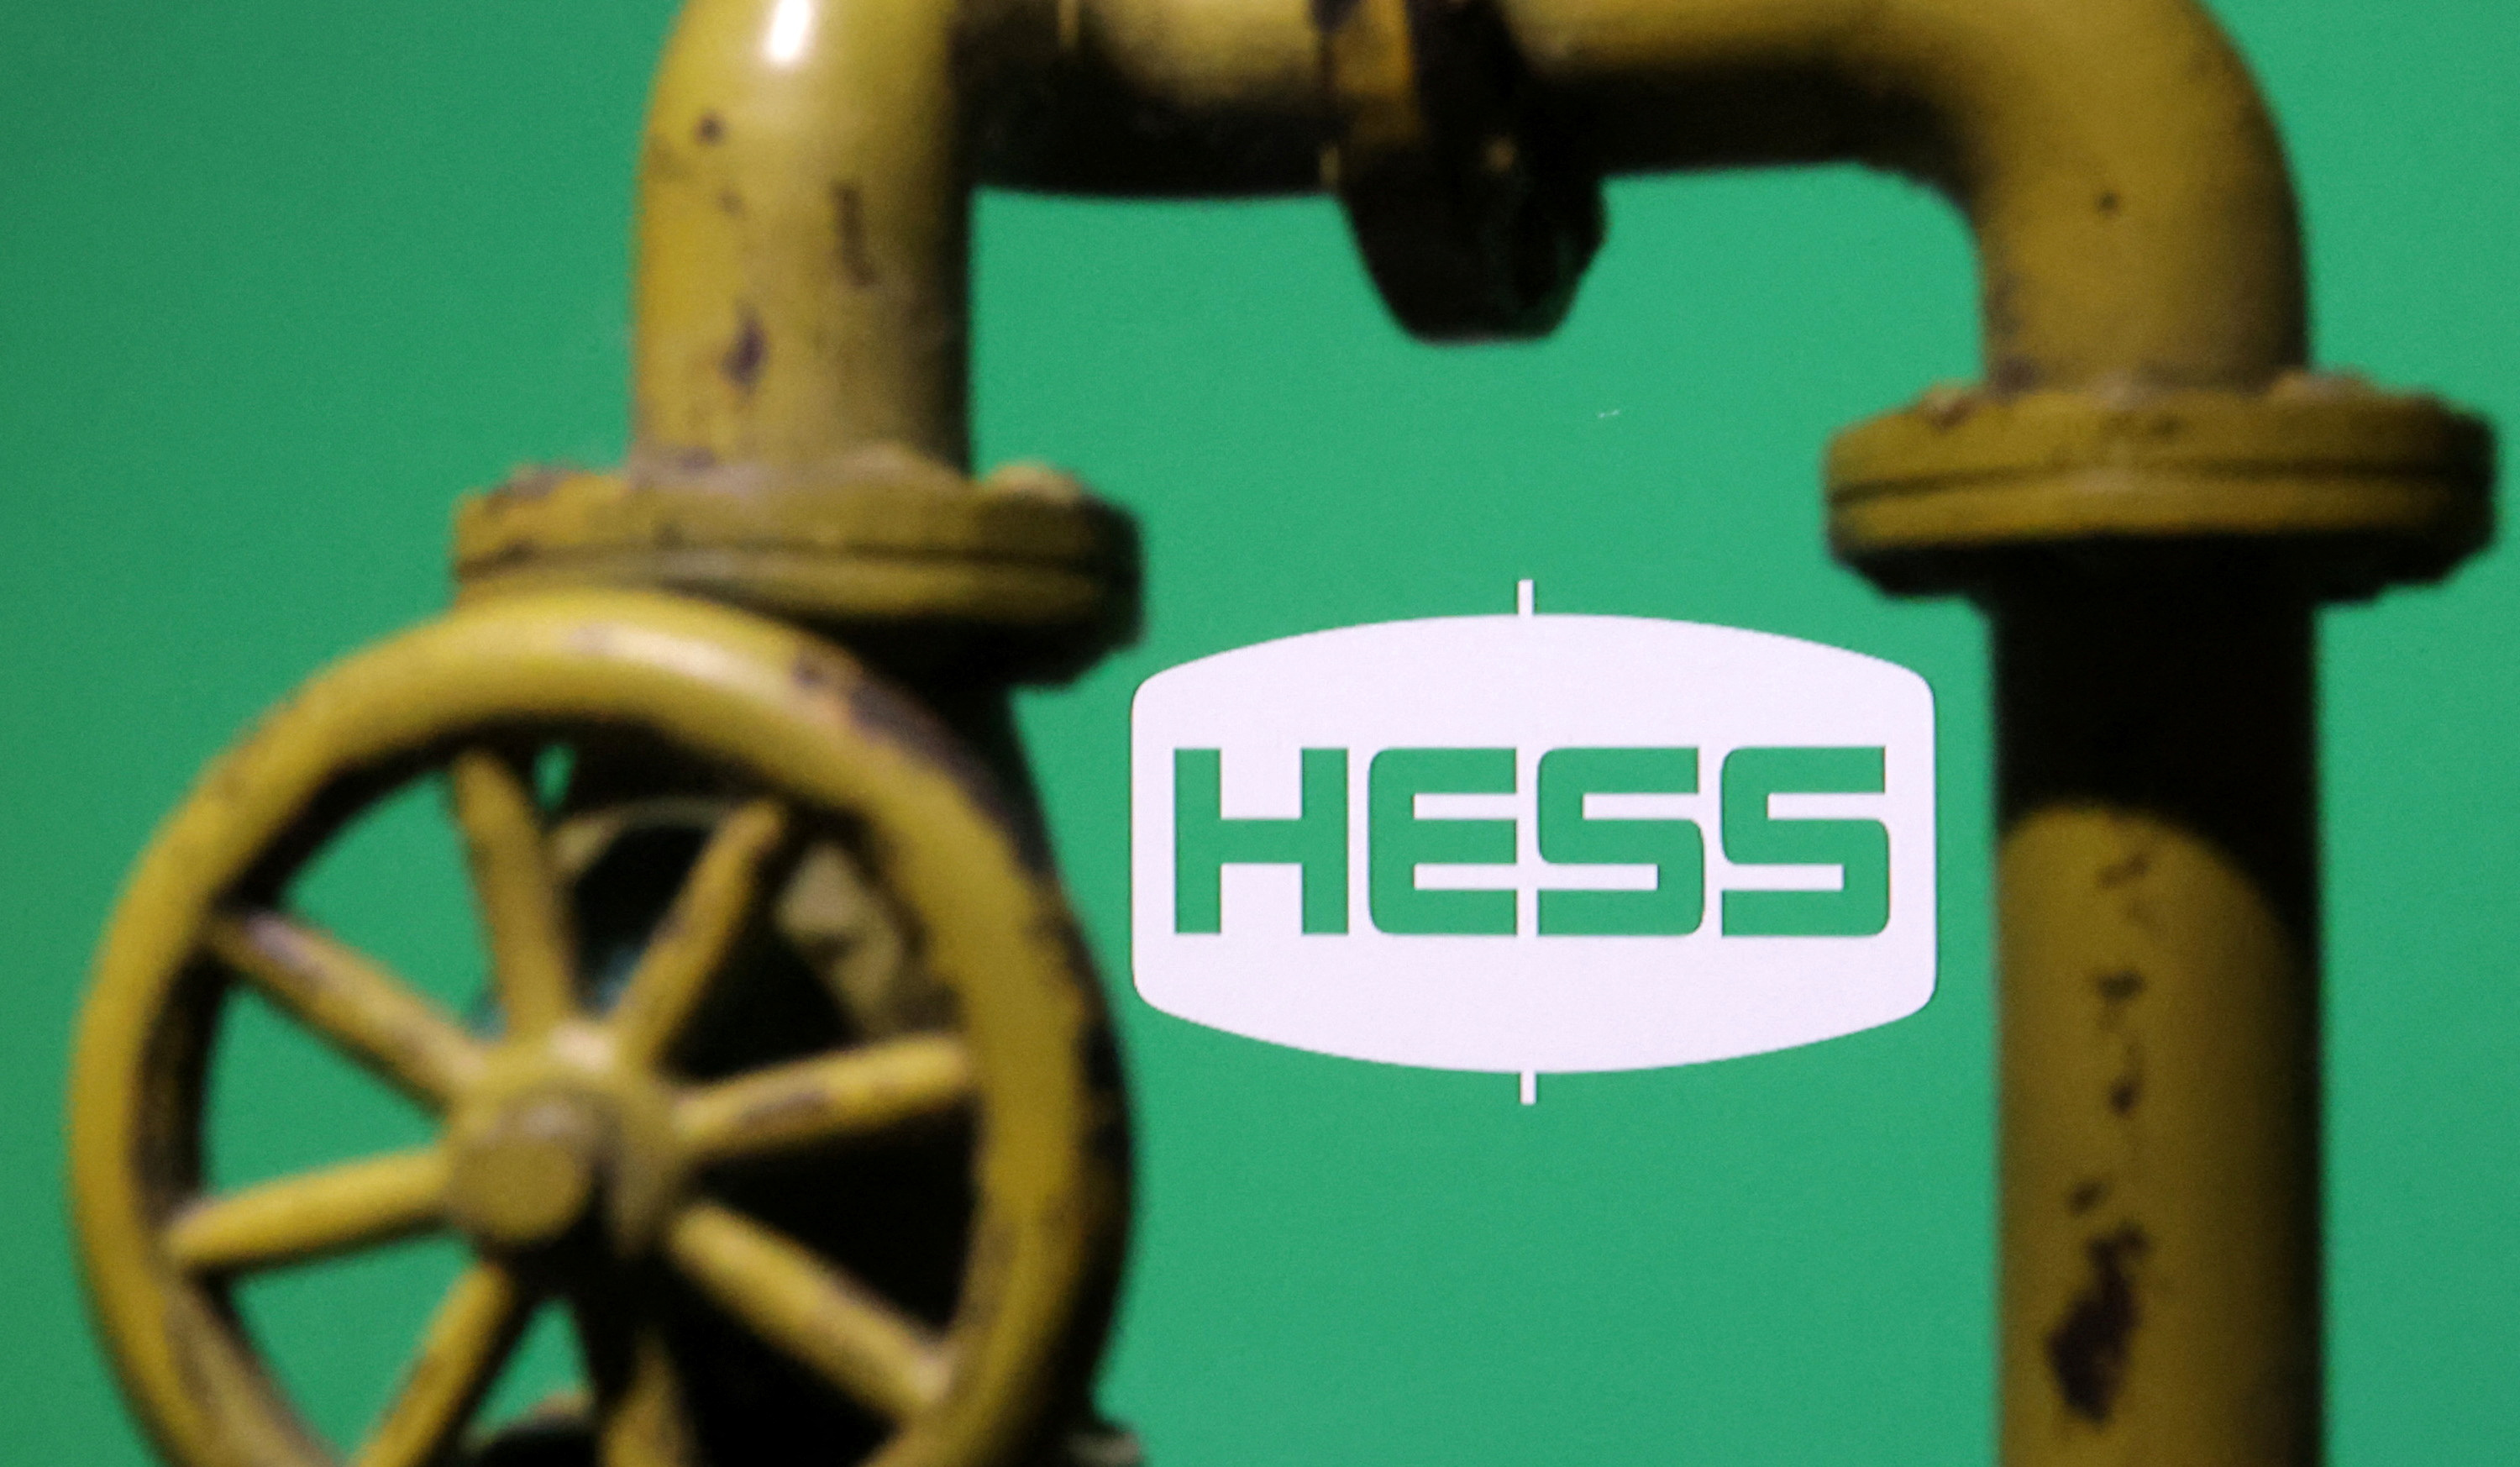 Illustration shows Hess logo